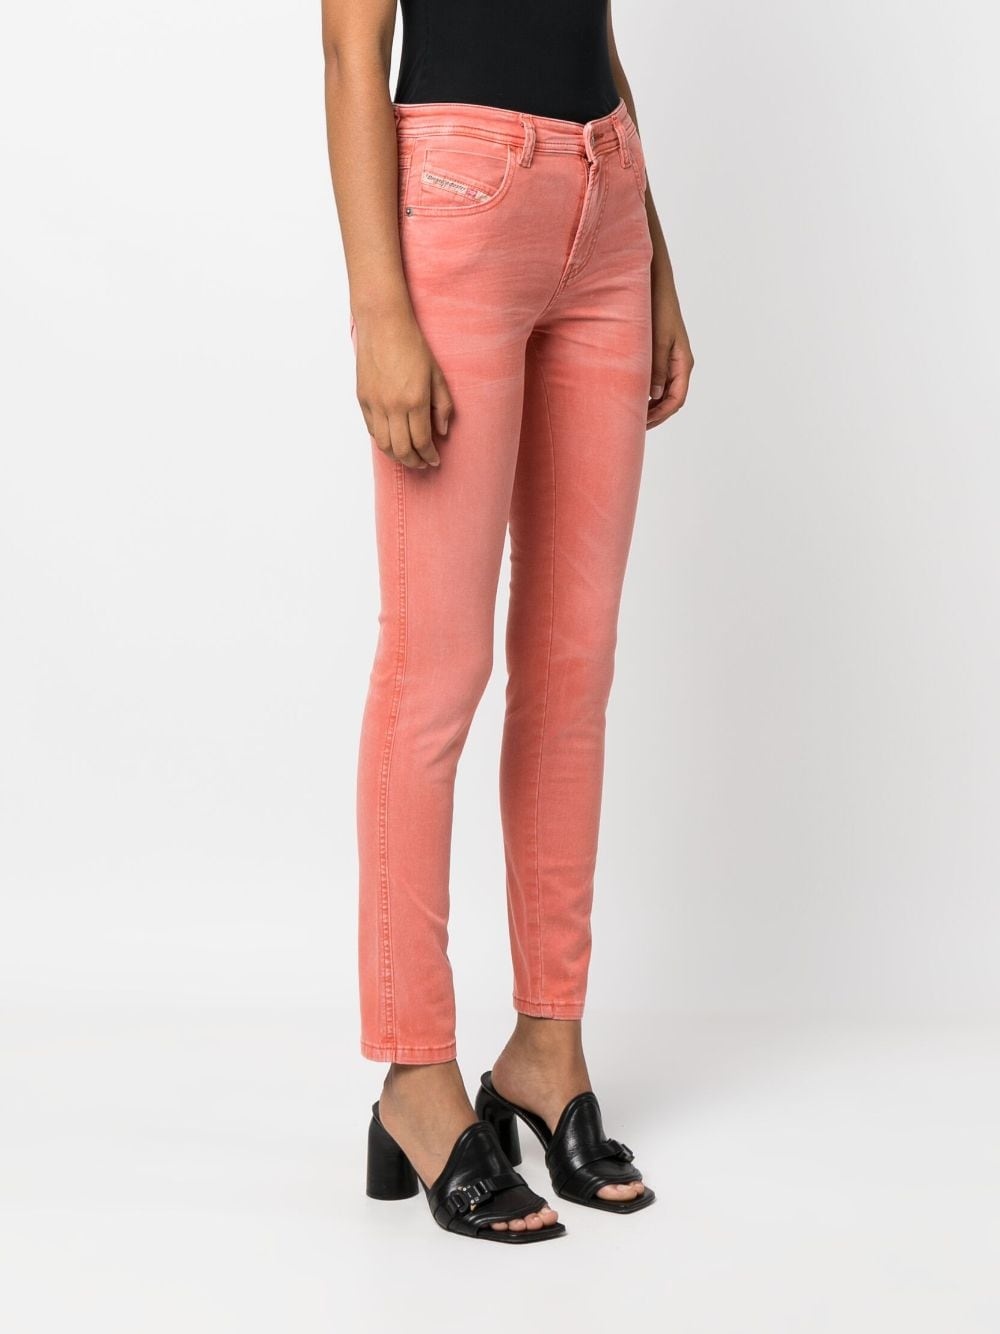 2015 Babhila skinny jeans - 3